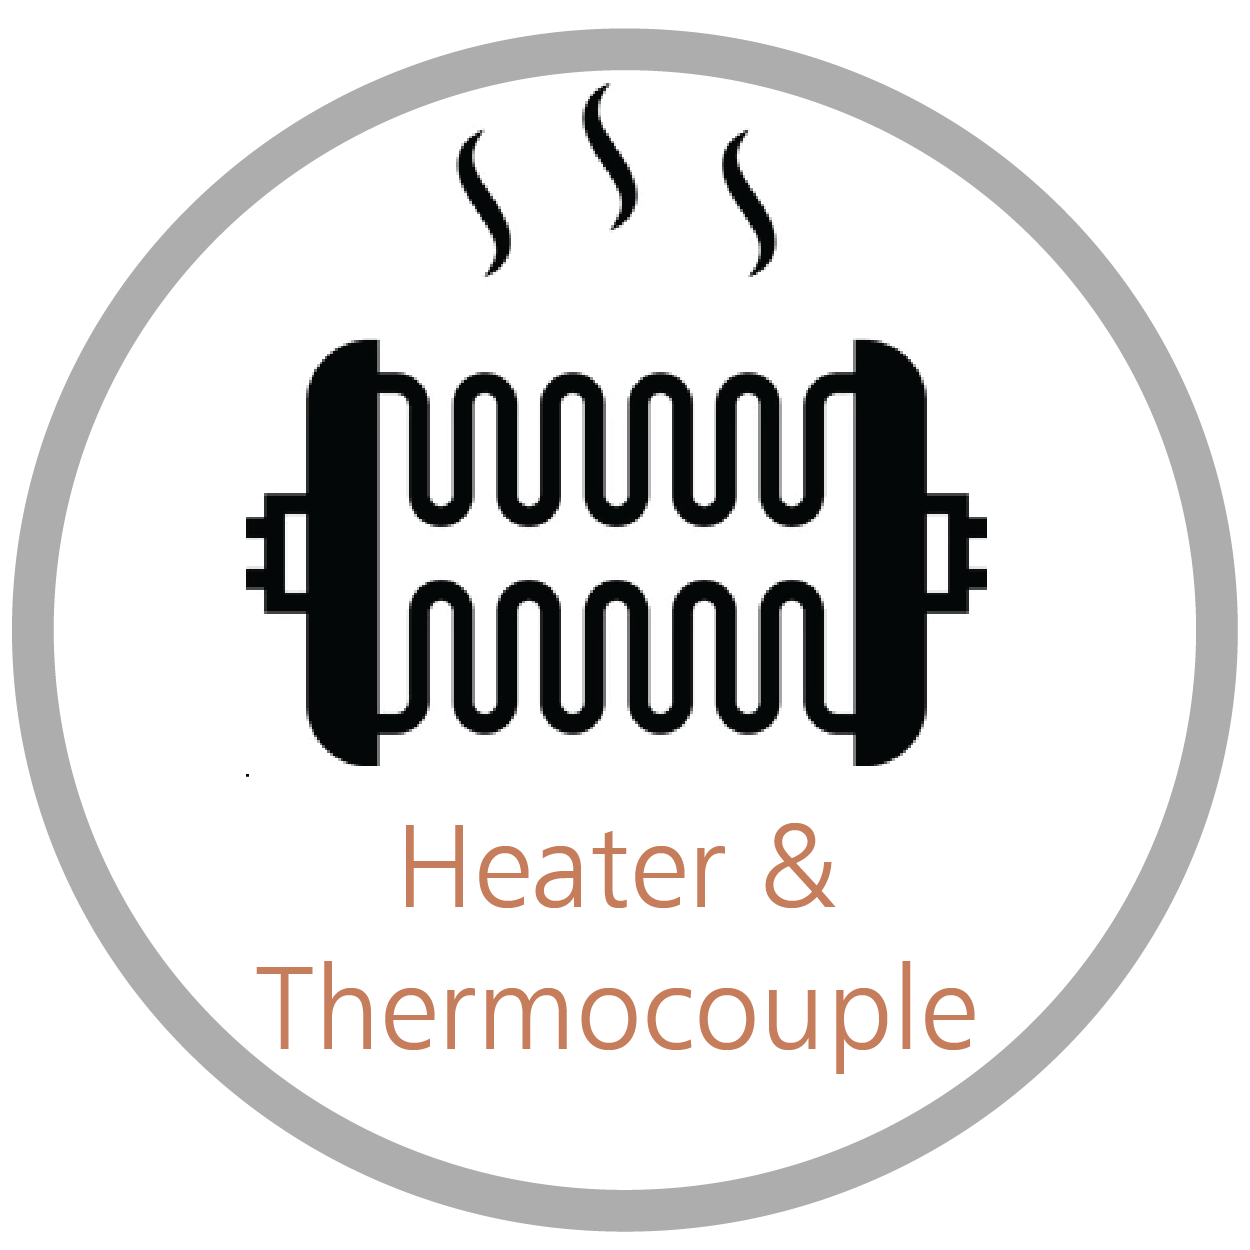 Heater & Thermocouple